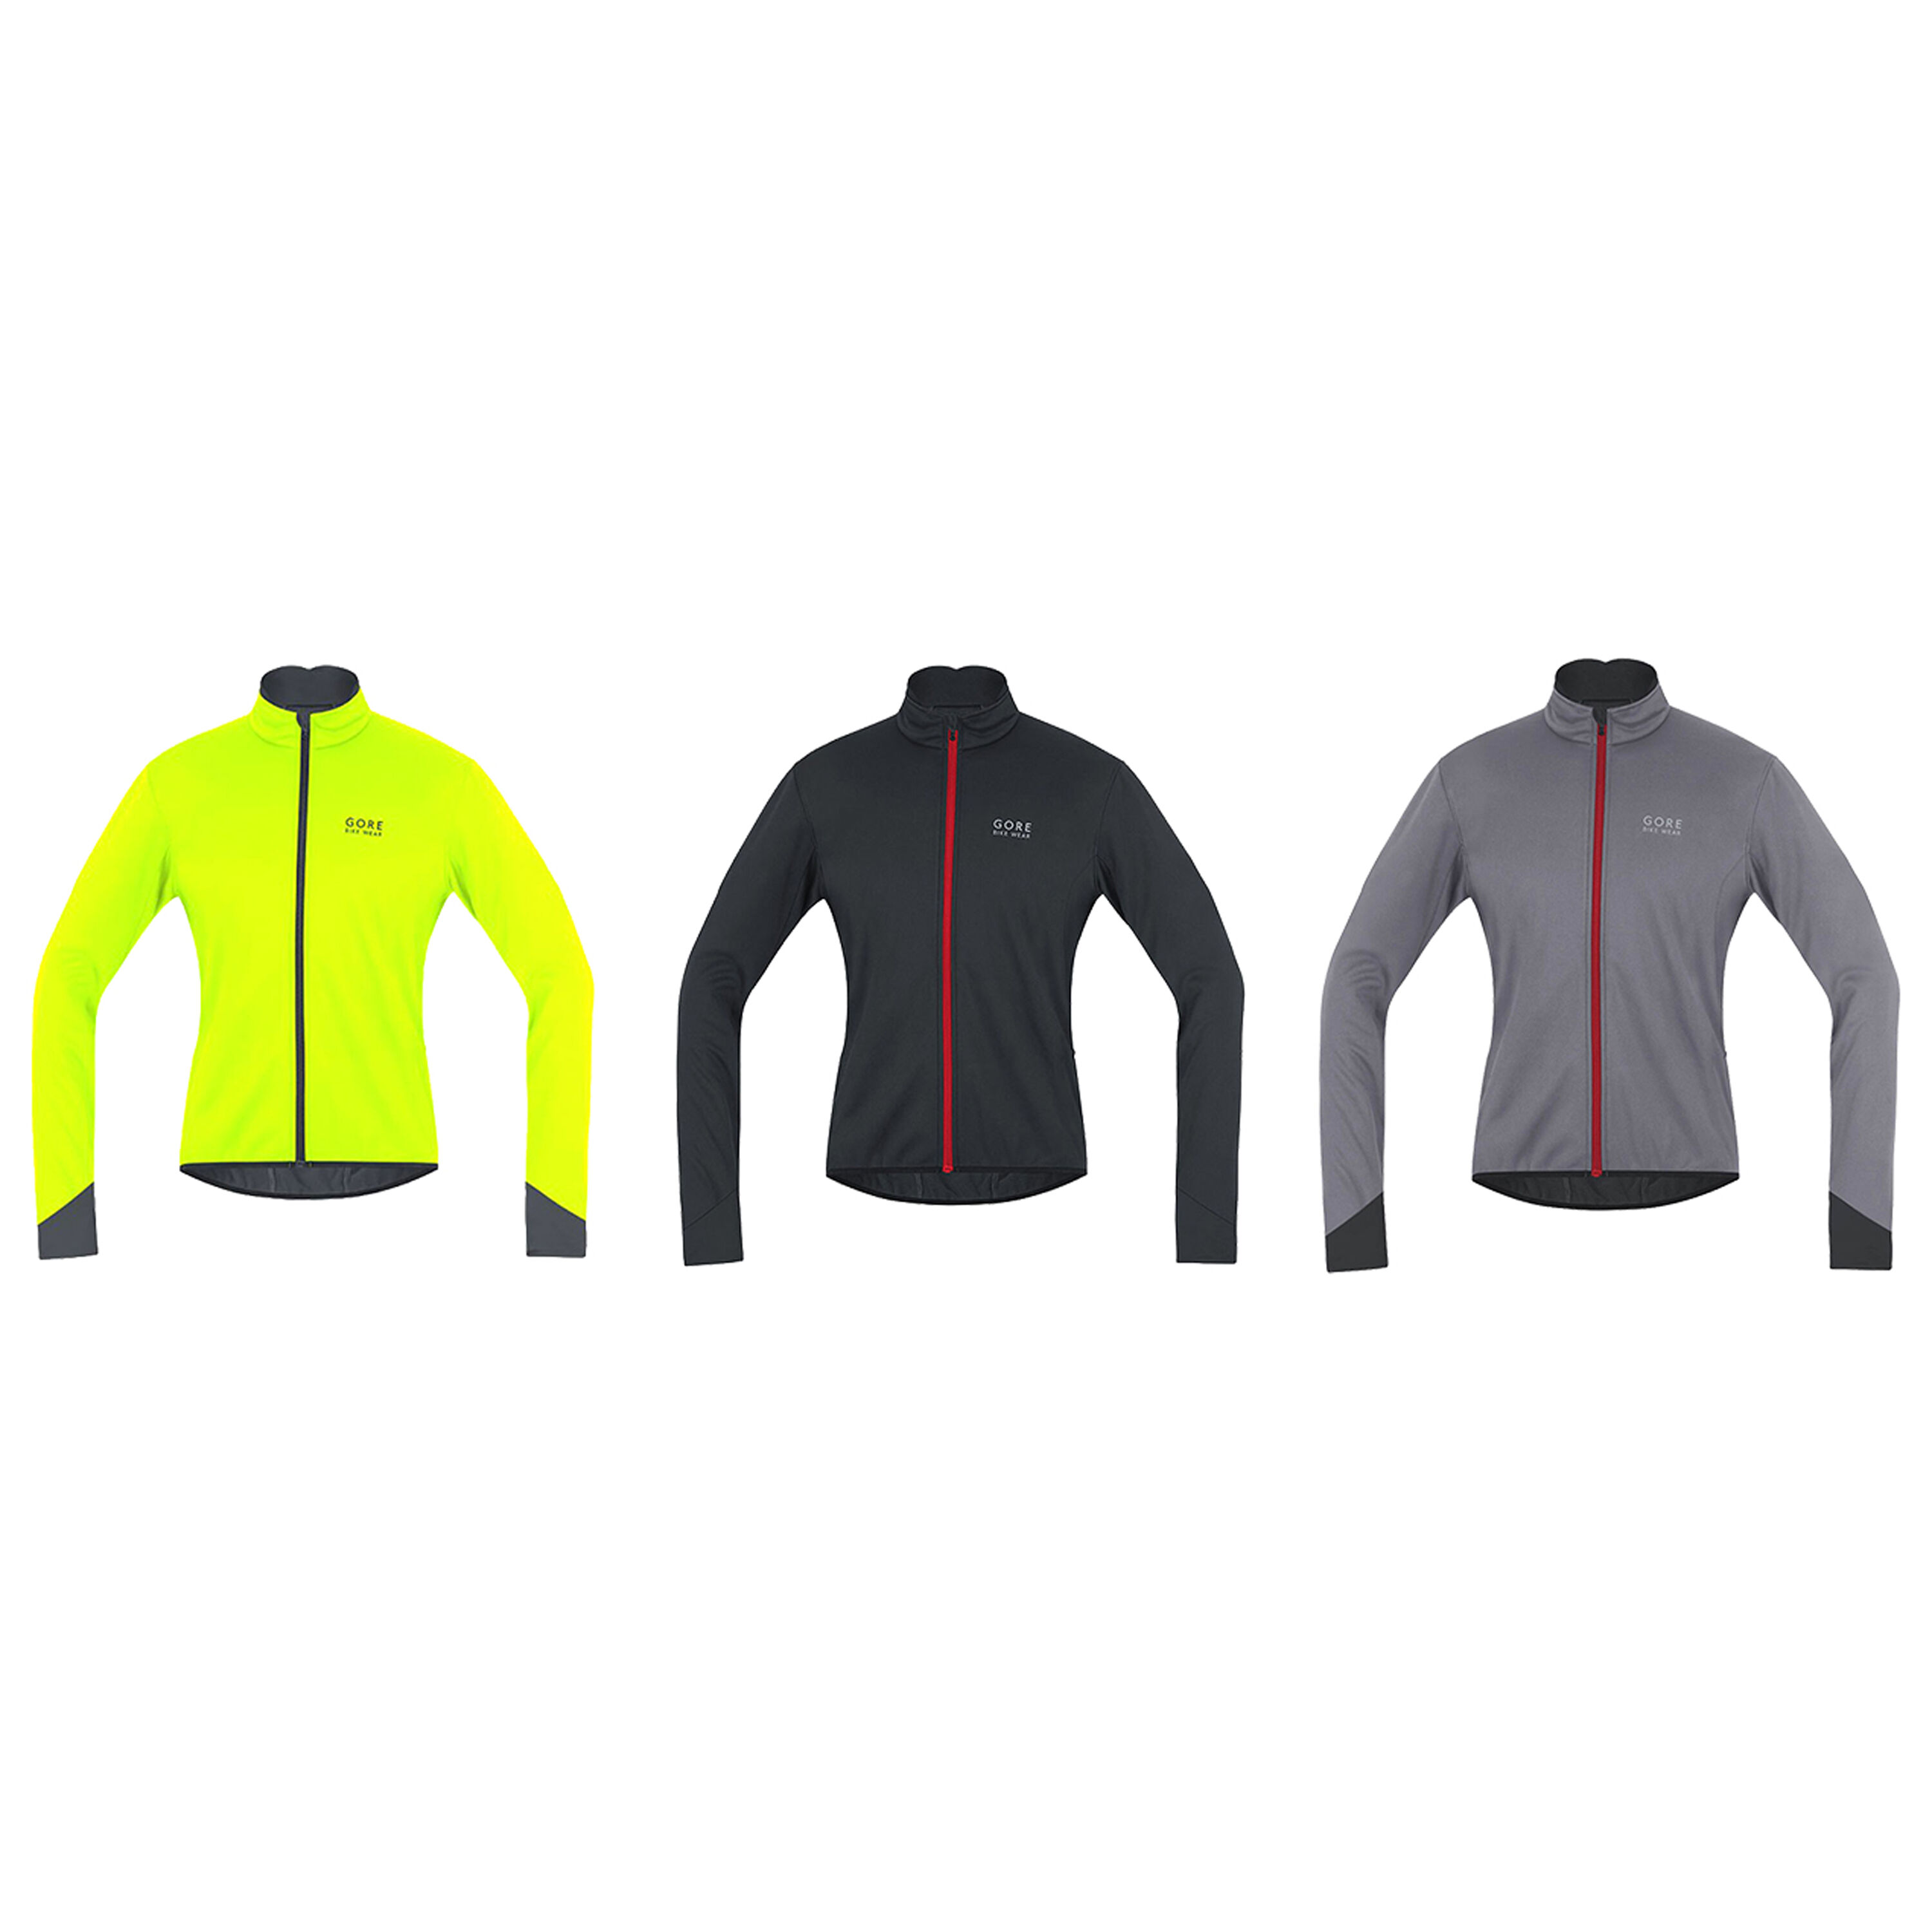 Chaqueta Gore Wear 2.0 Soft Shell 2018 LordGun de bicicletas online